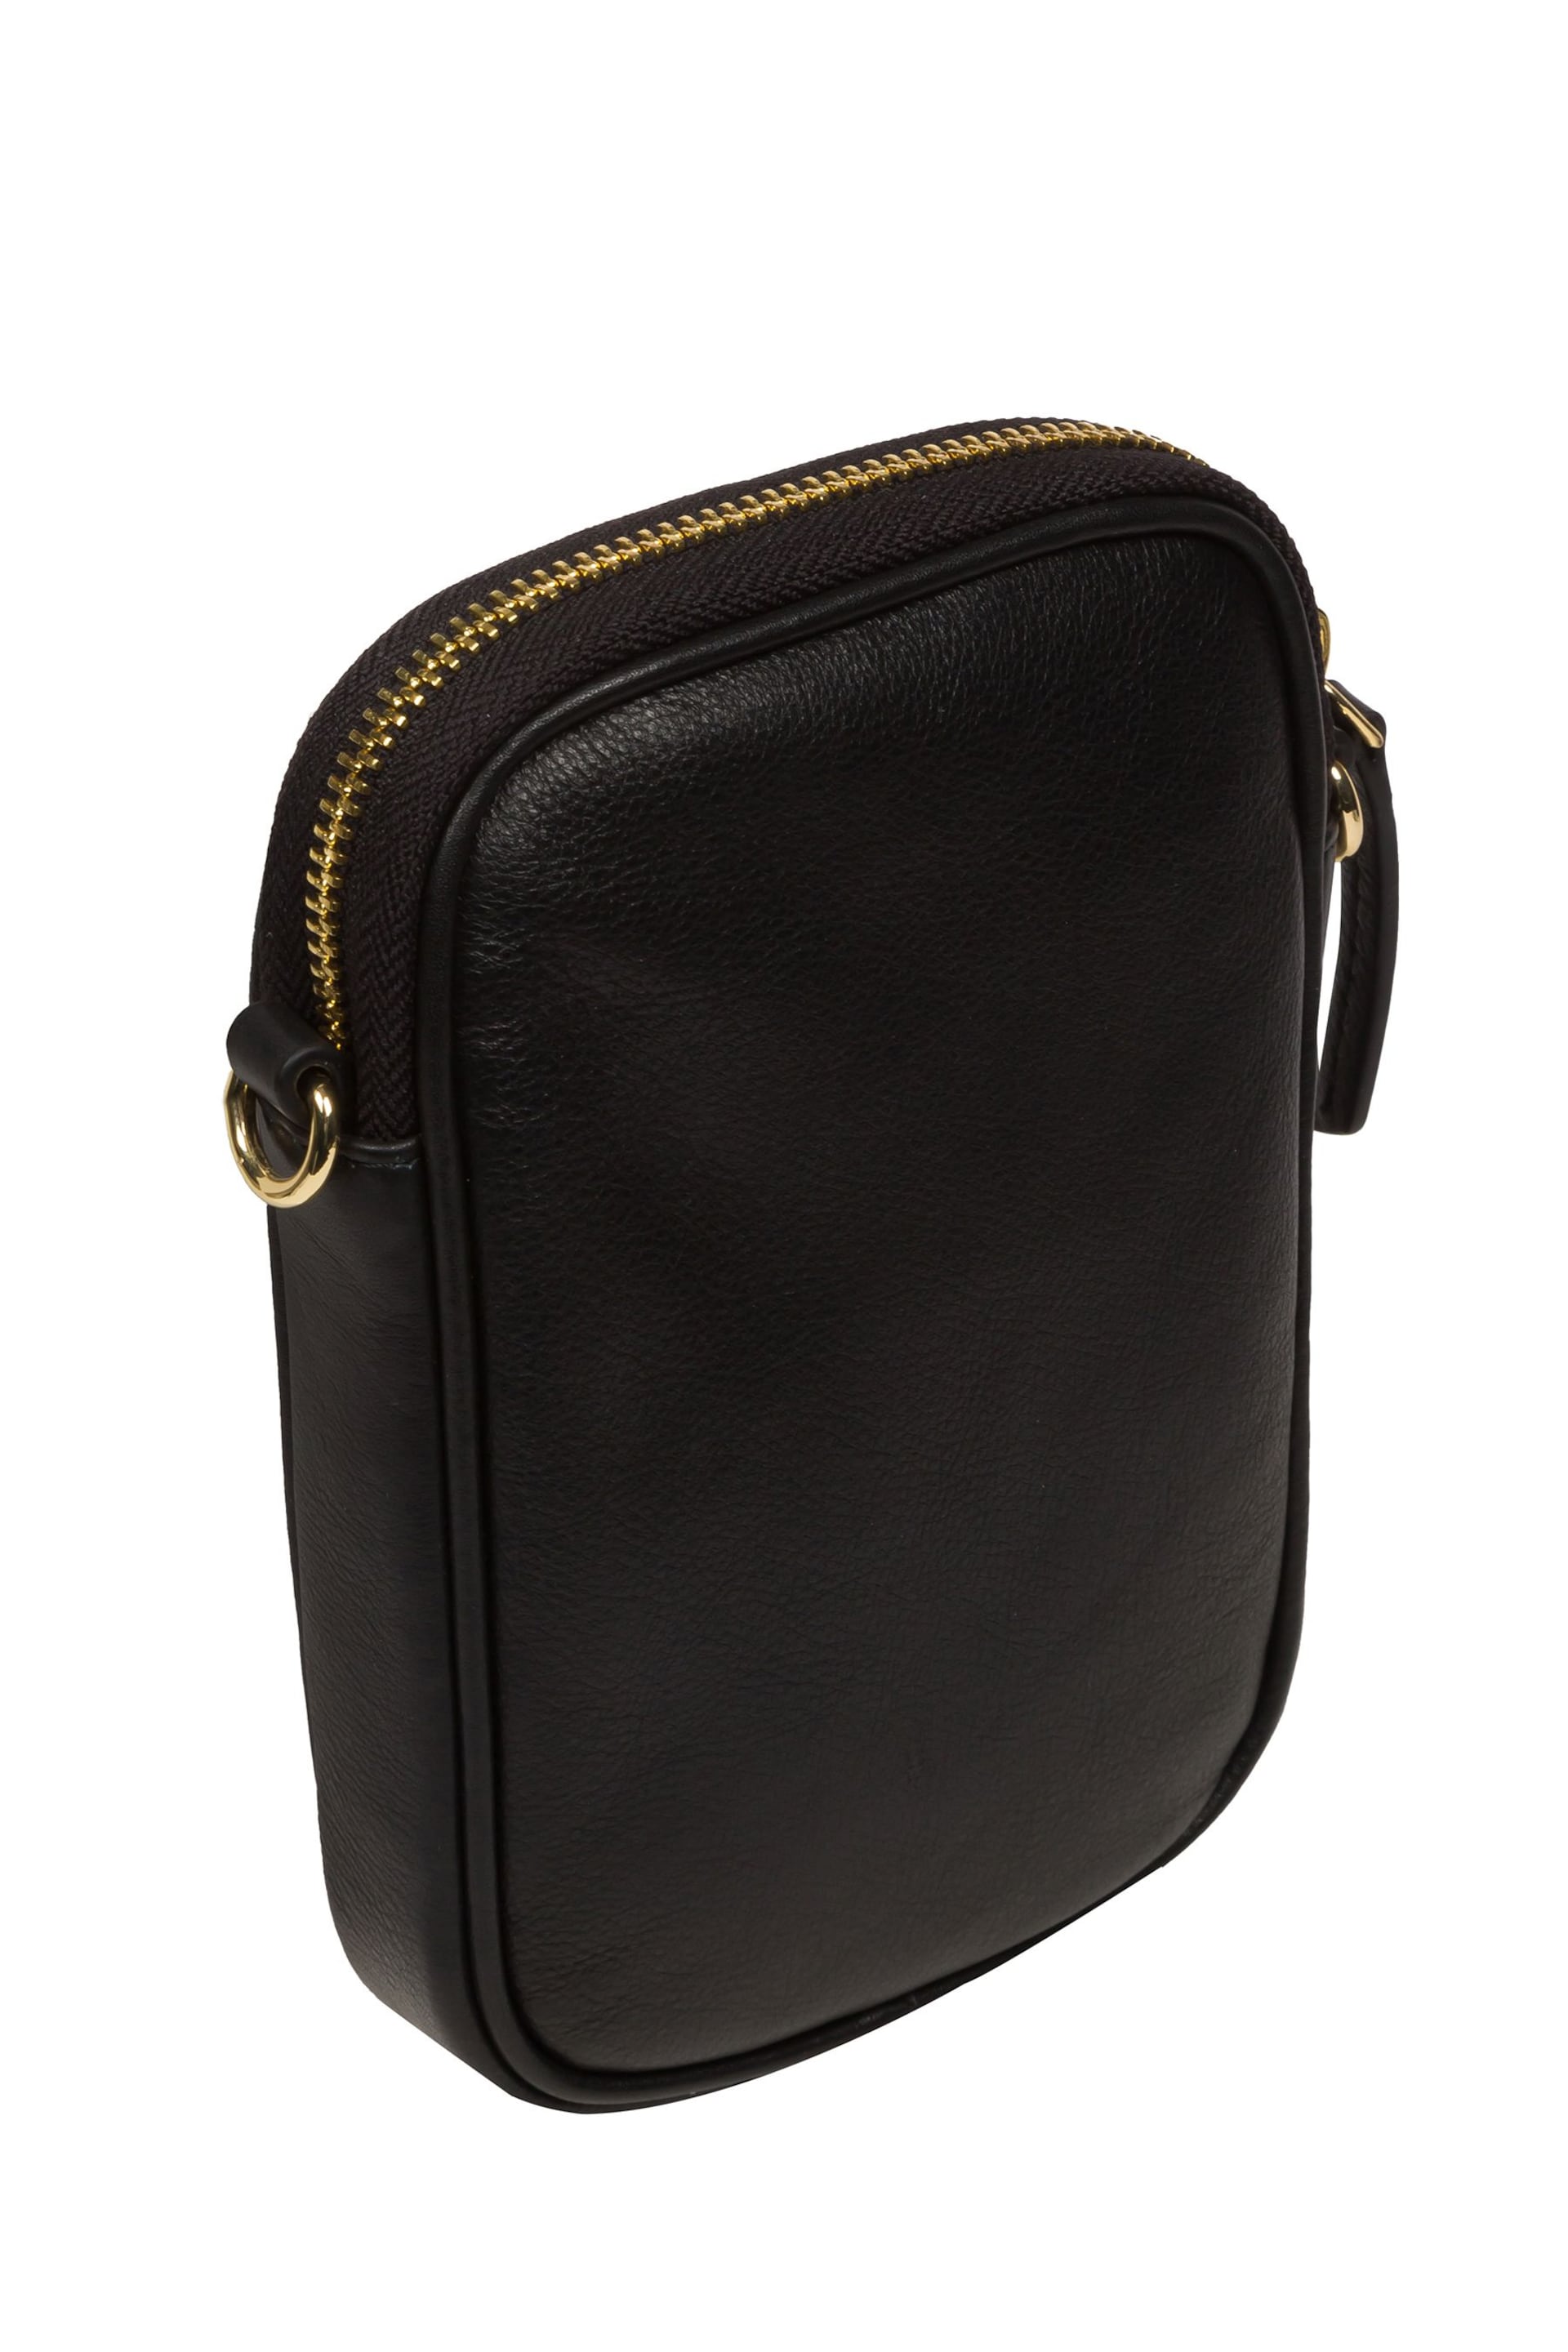 Pure Luxuries London Alaina Nappa Leather Cross-Body Phone Bag - Image 5 of 8